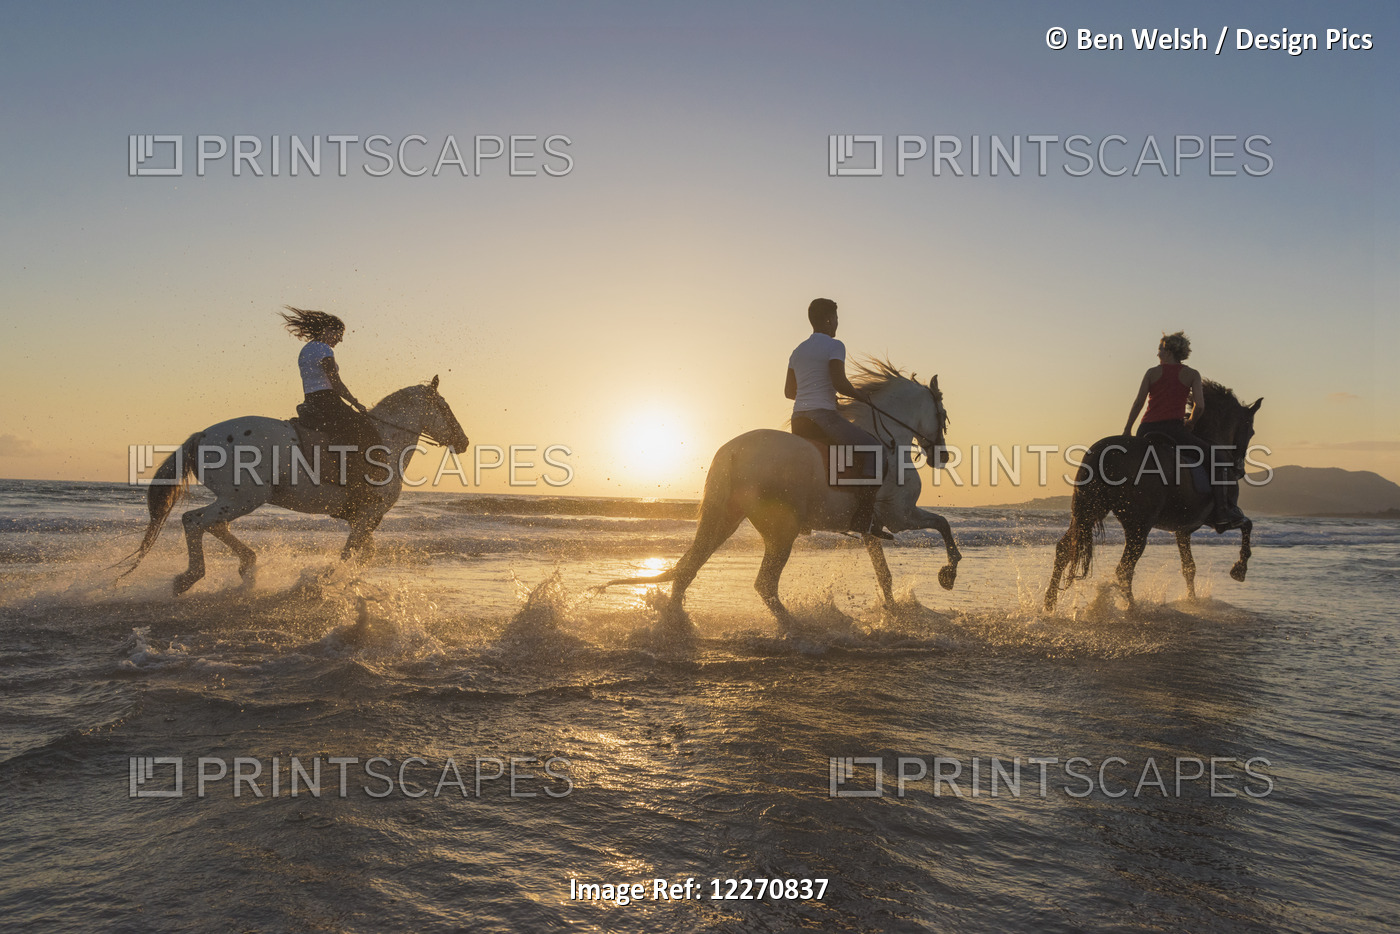 Horseback Riding In The Shallow Water At Sunset; Tarifa, Cadiz, Andalusia, Spain